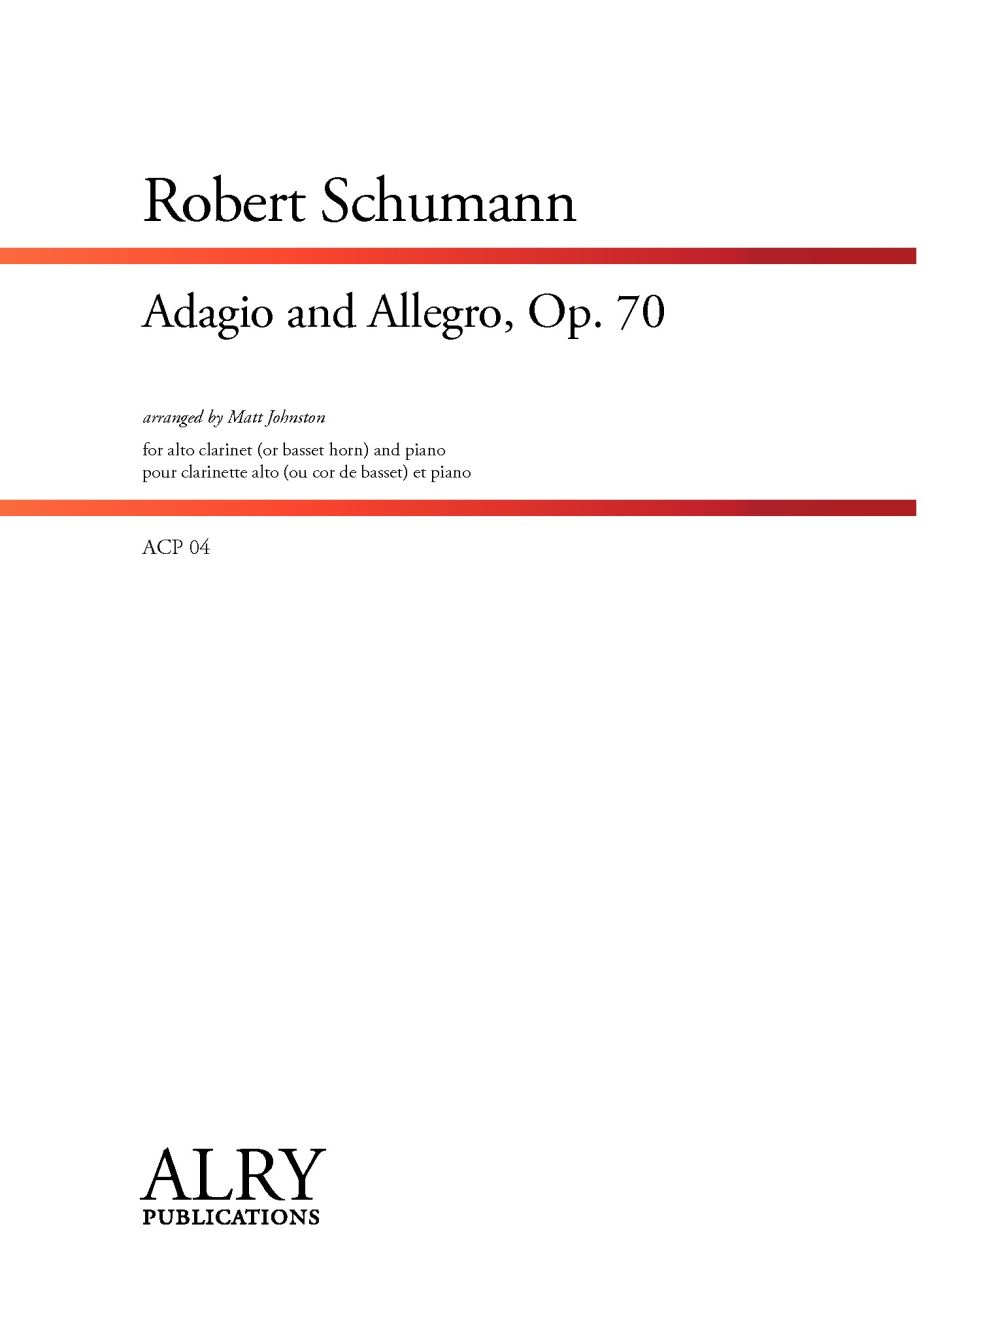 Adagio And Allegro, Op. 70 (SCHUMANN ROBERT)